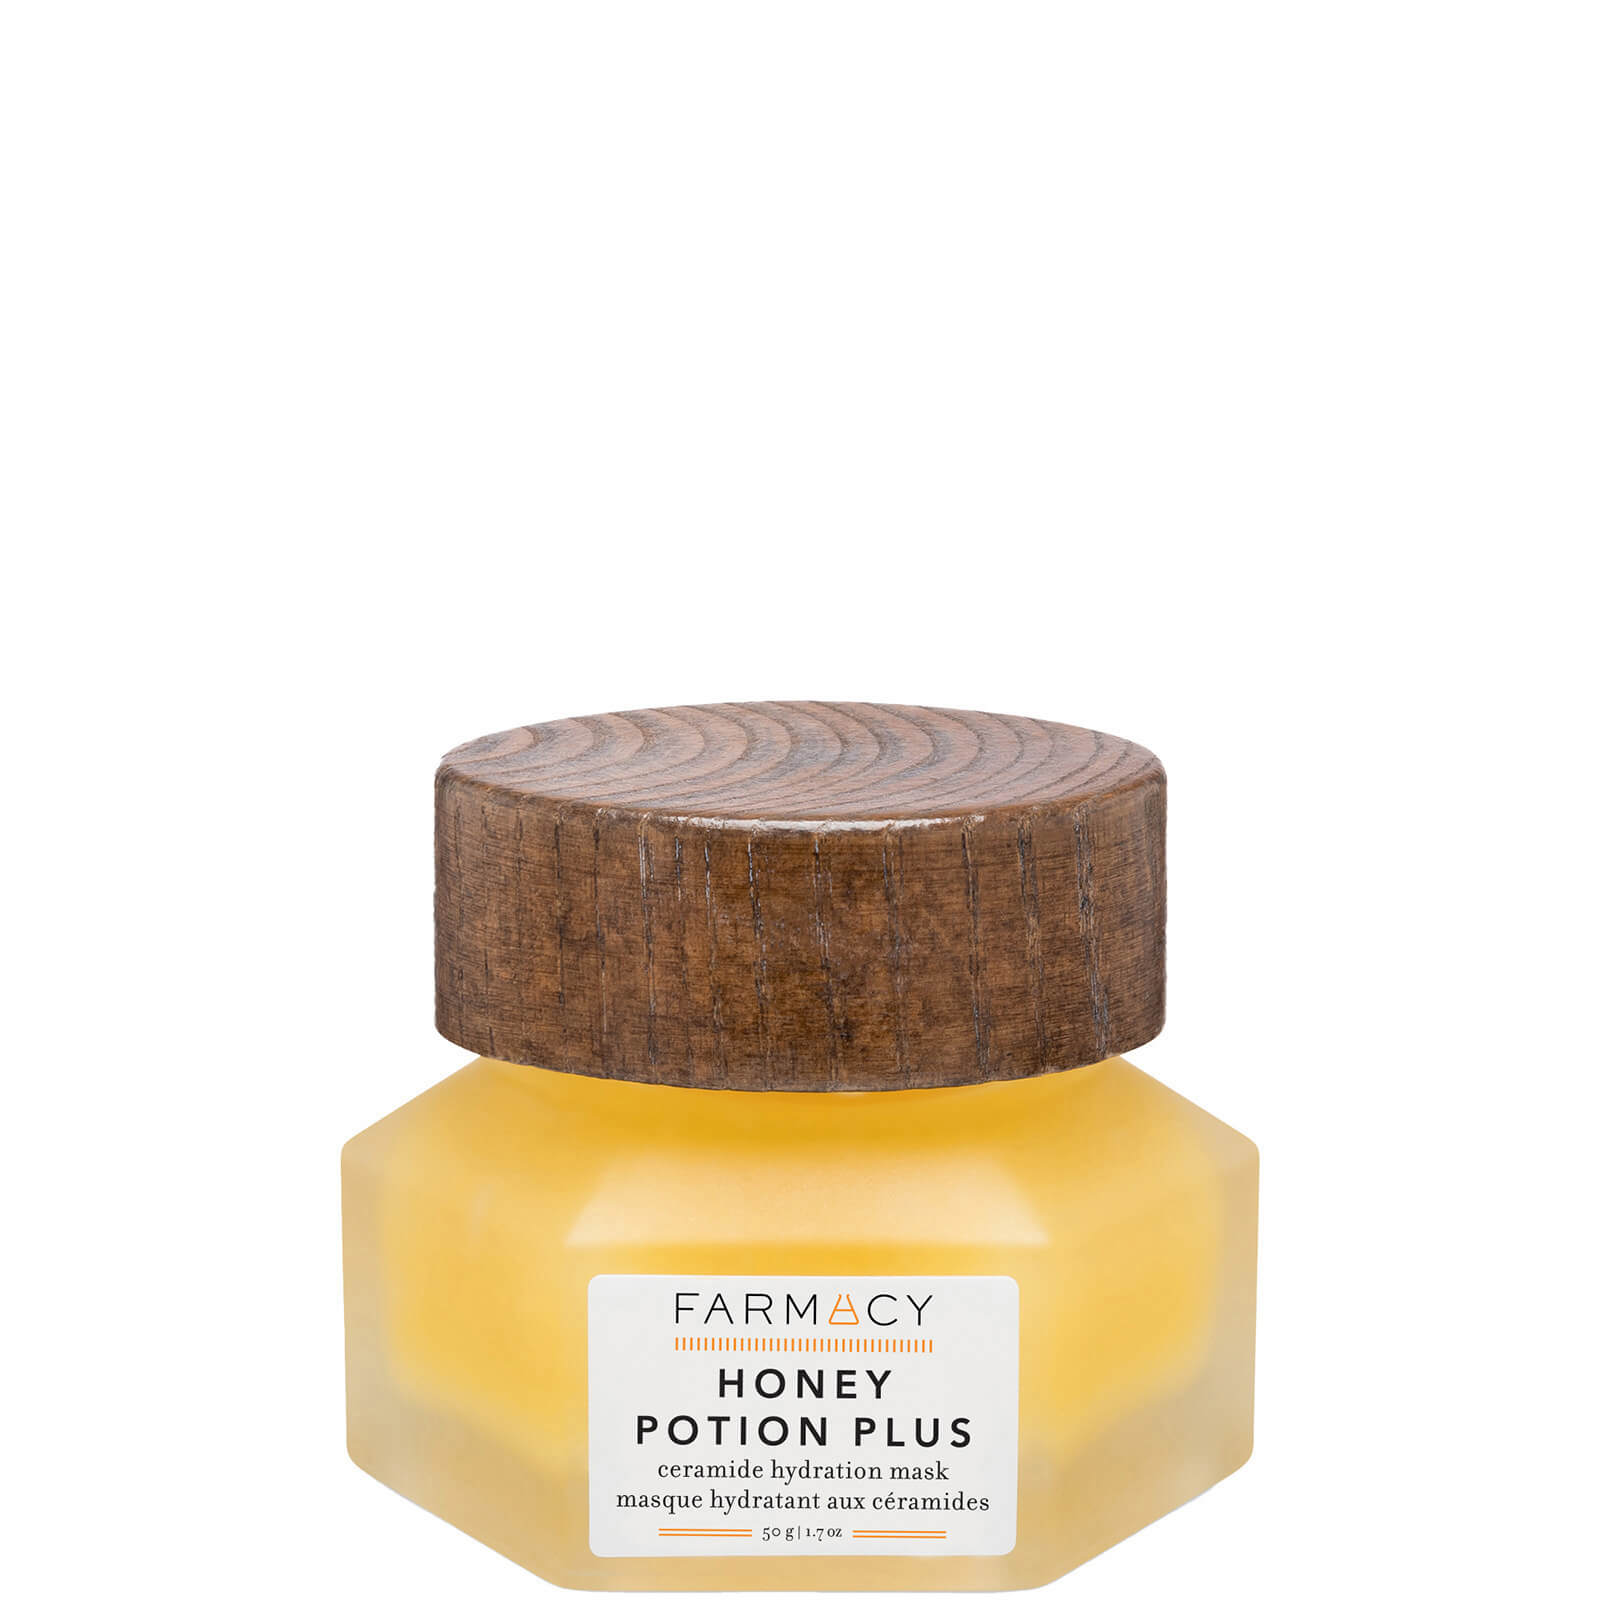 FARMACY Honey Potion Plus Ceramide Hydration Mask 50g von FARMACY